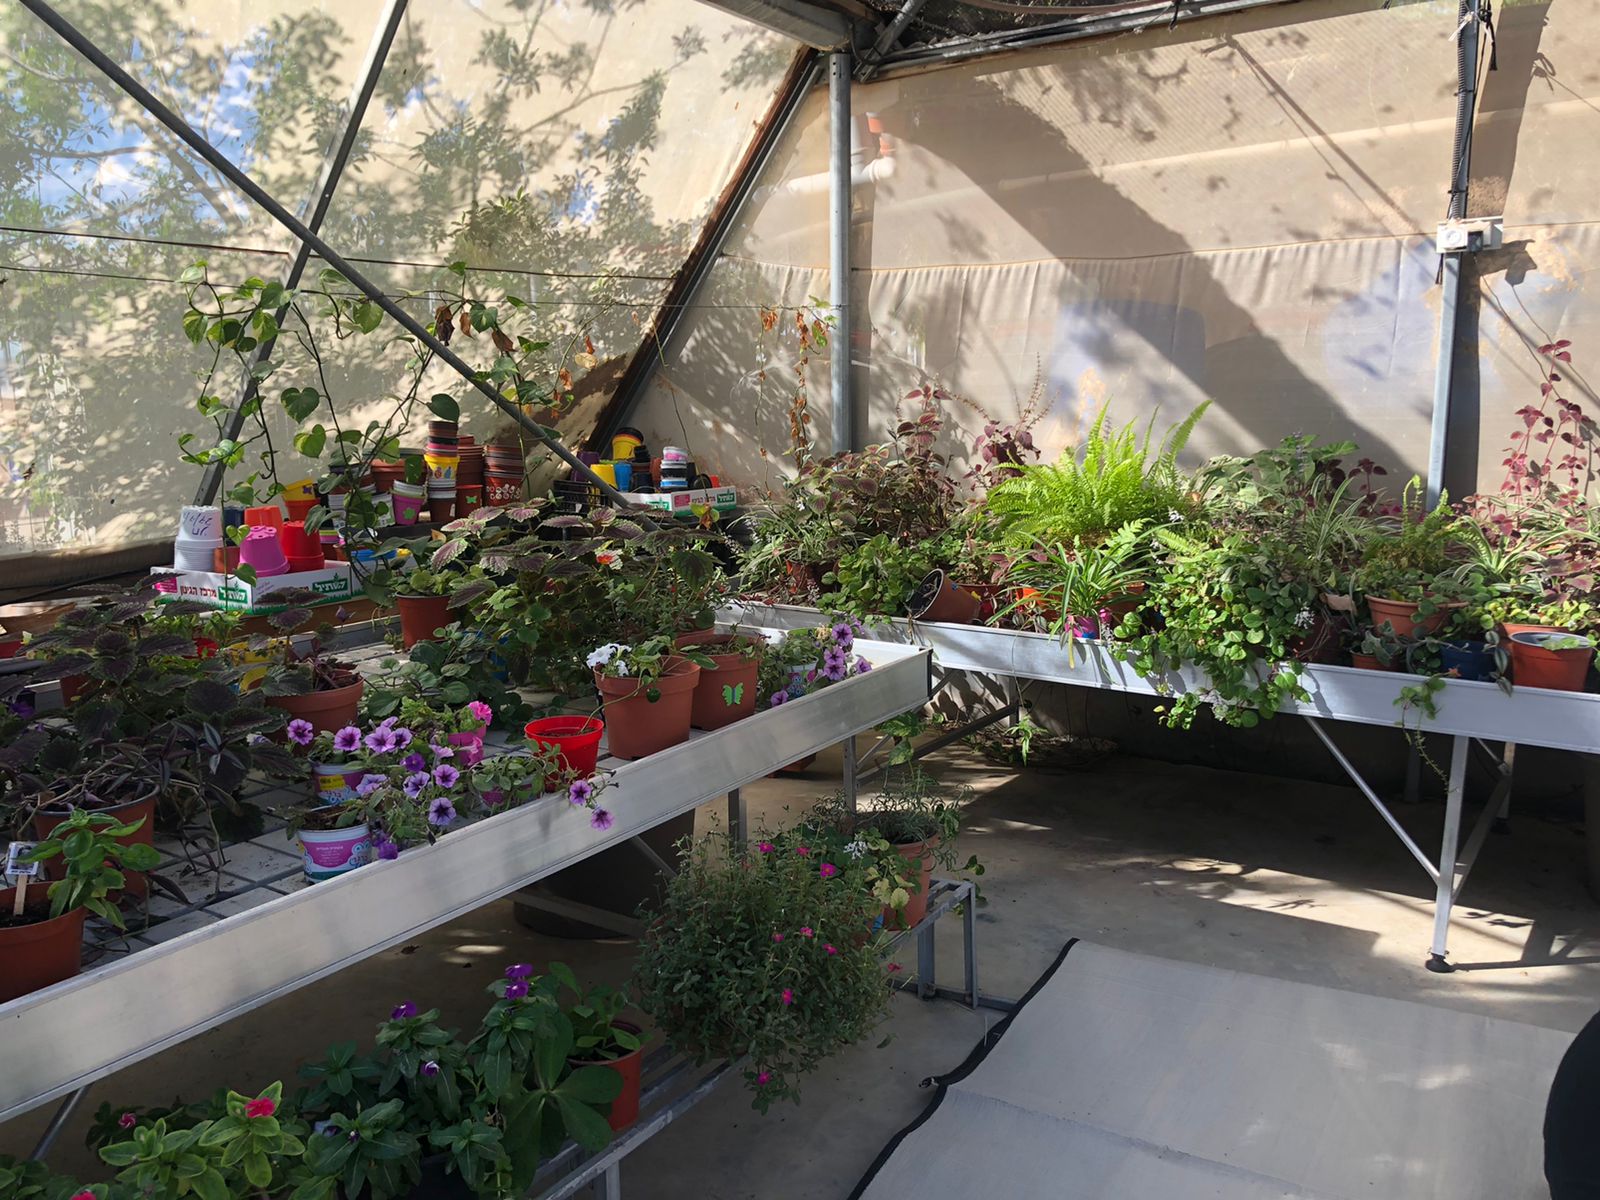 Potted plants inside a green house עציצים עם פרחים בתוך חממה